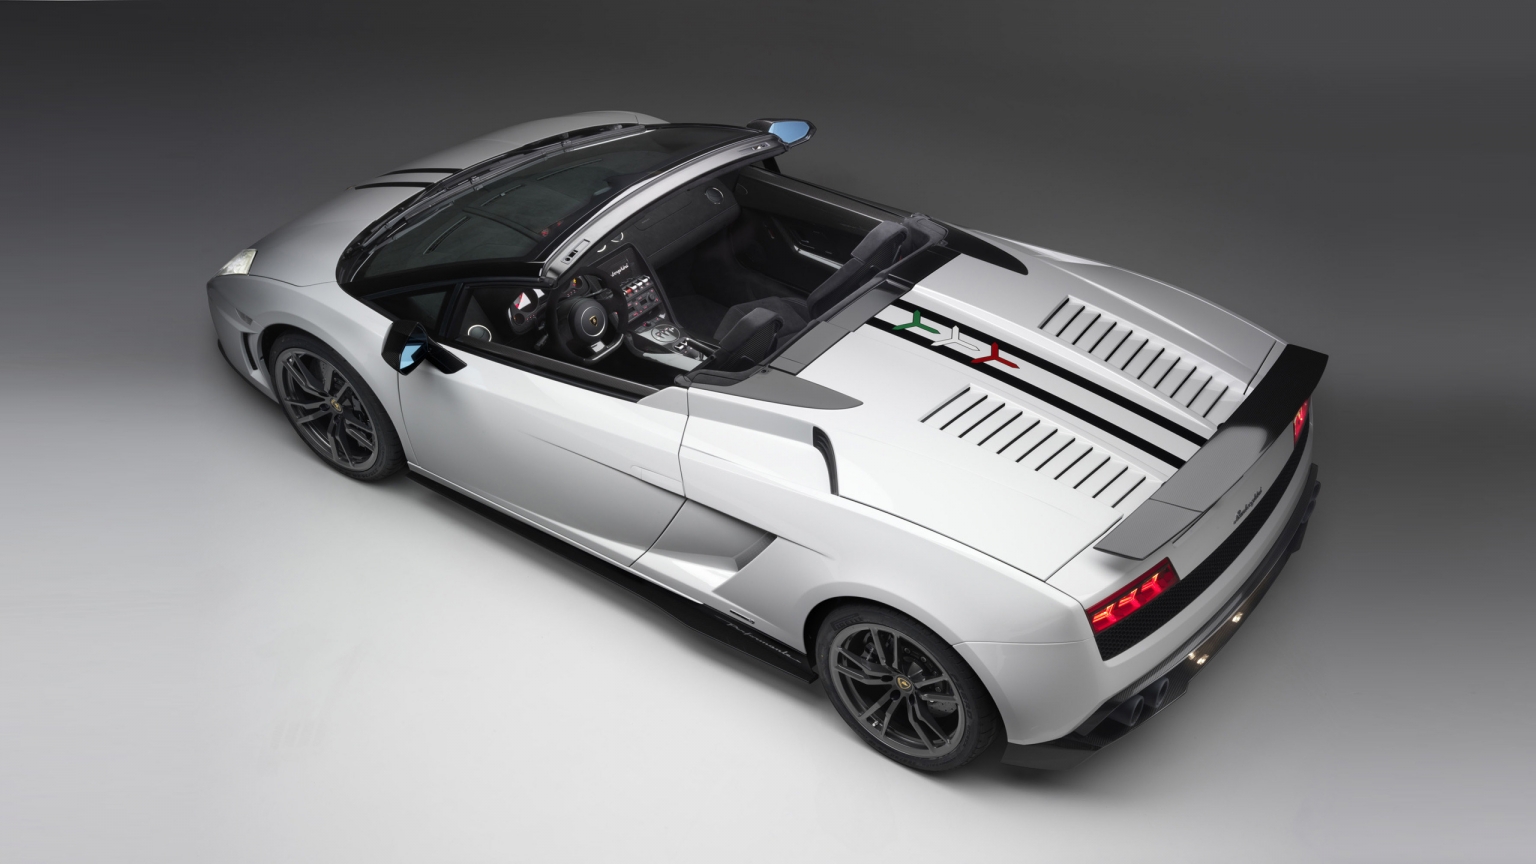 2011 Lamborghini Gallardo LP 570 4 Spyder for 1536 x 864 HDTV resolution